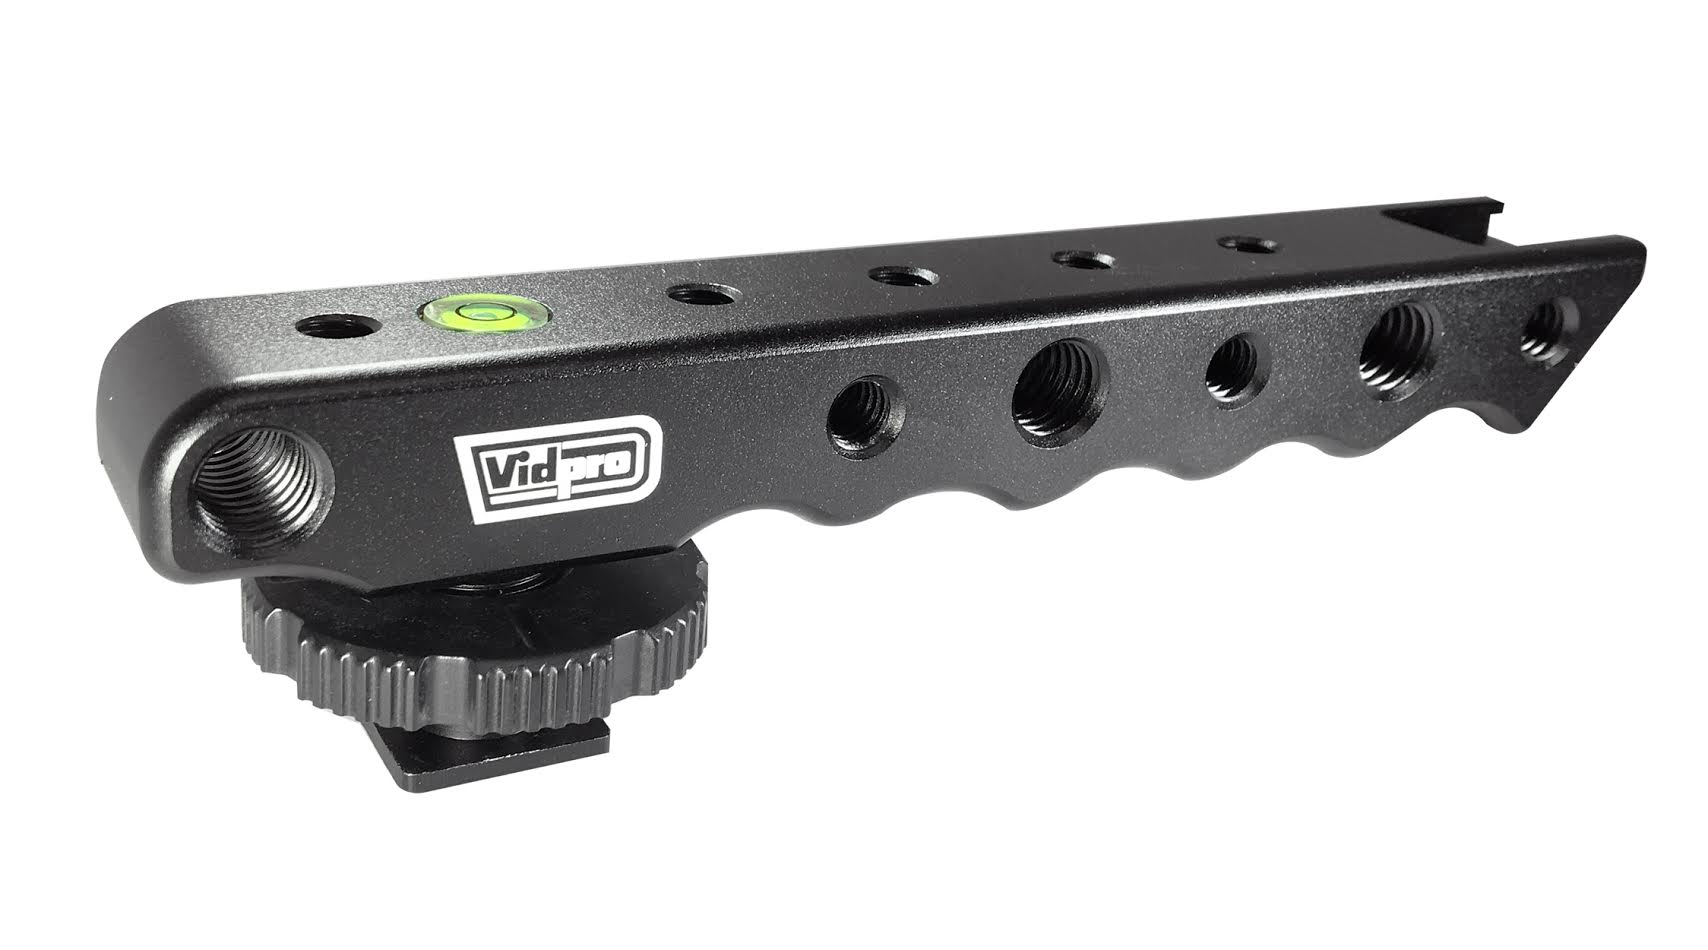 Video Stabilizers for Vivitar DVR 480 Camcorder